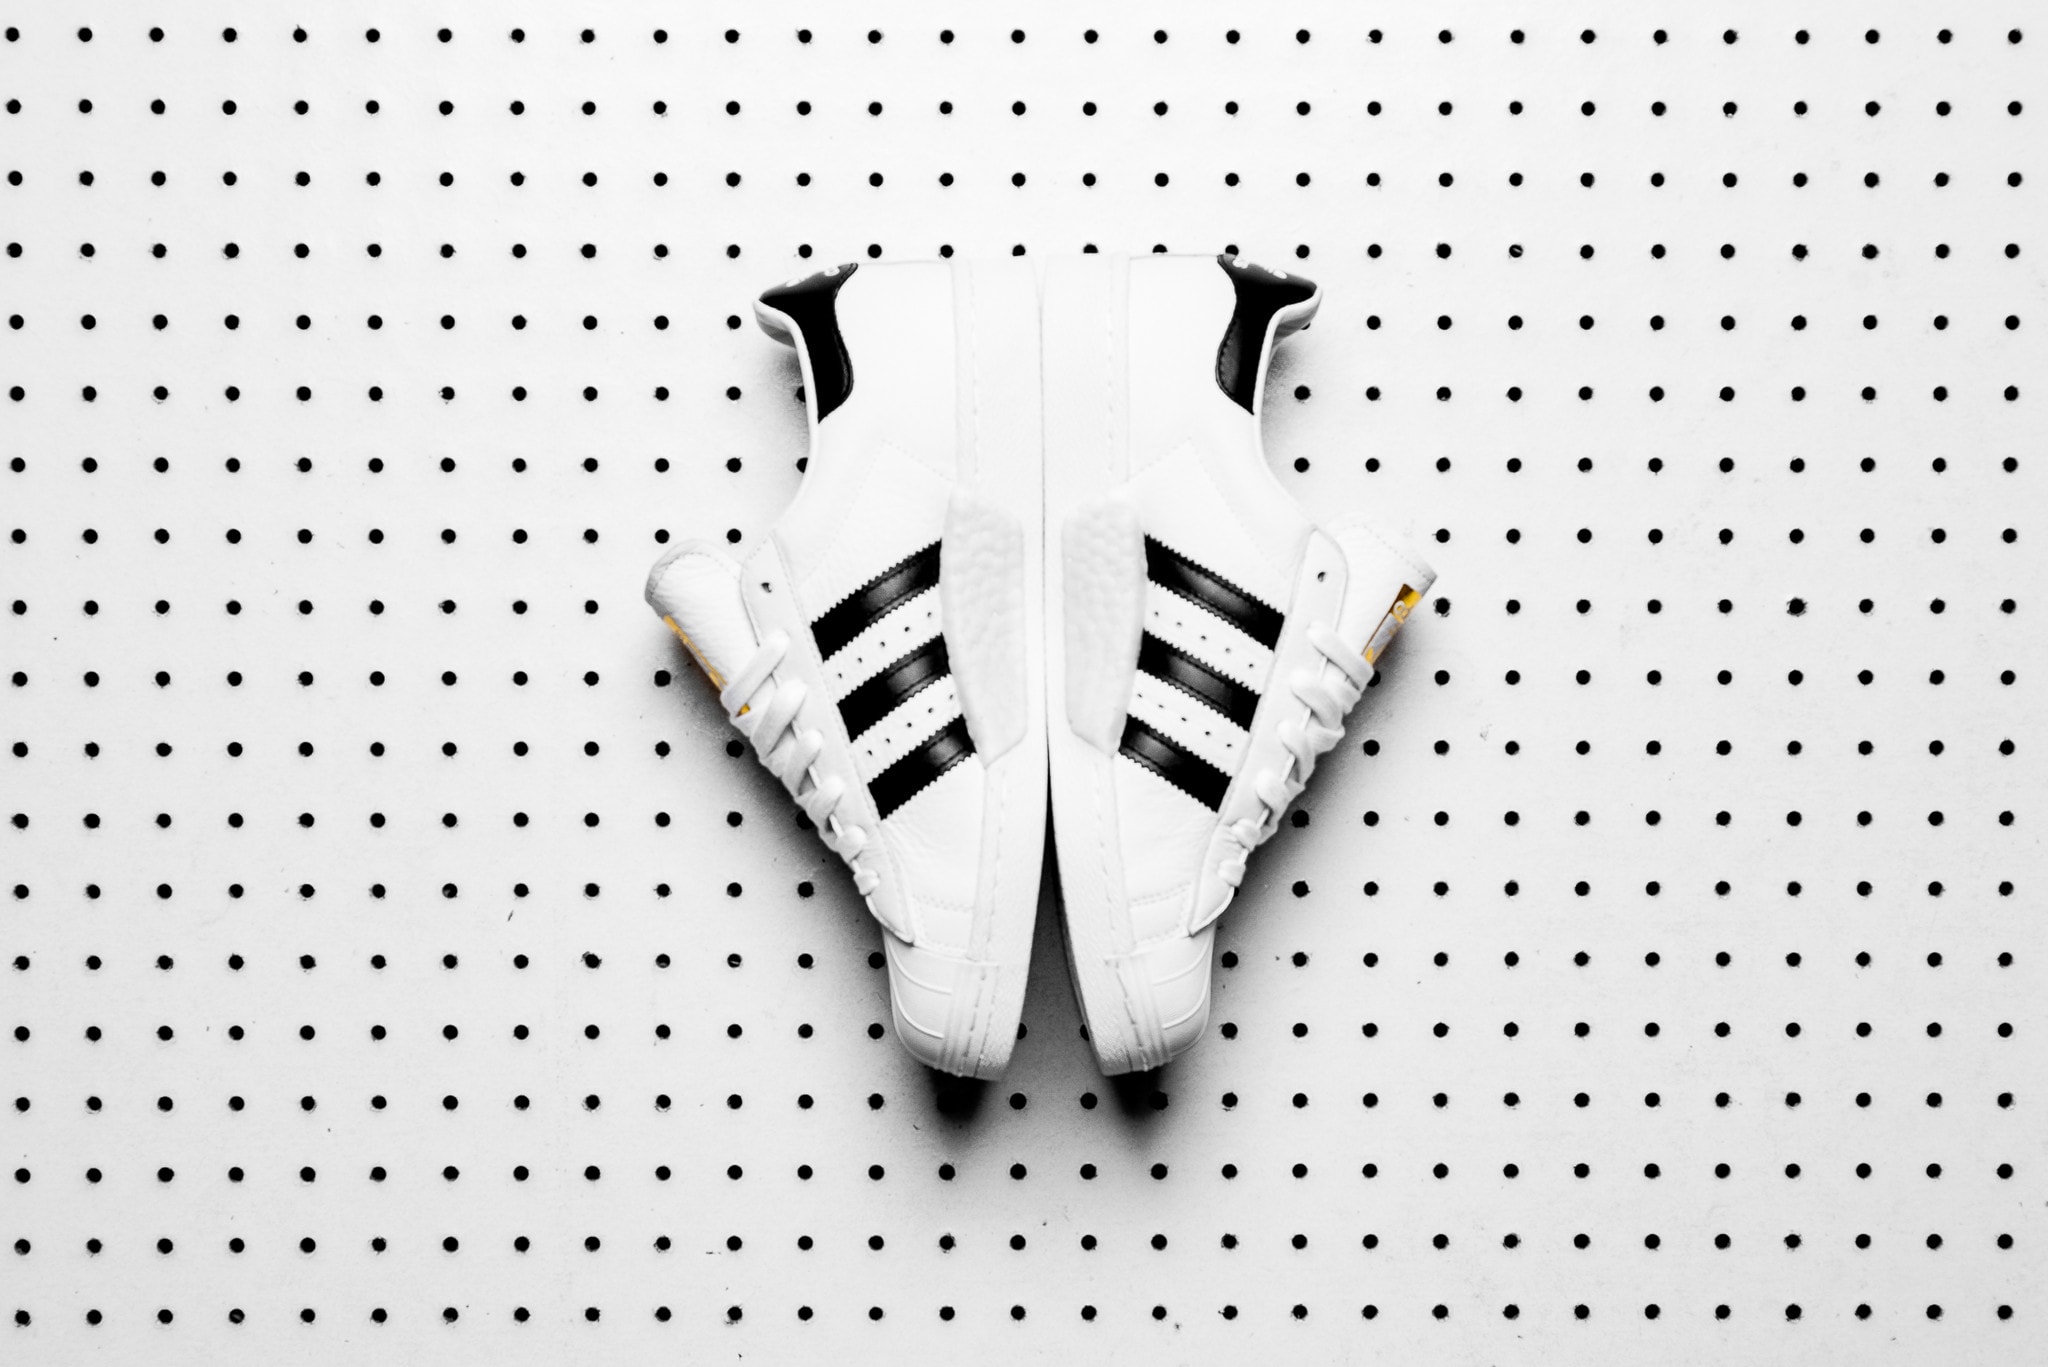 adidas Originals Superstar BOOST Black & White Closer Look